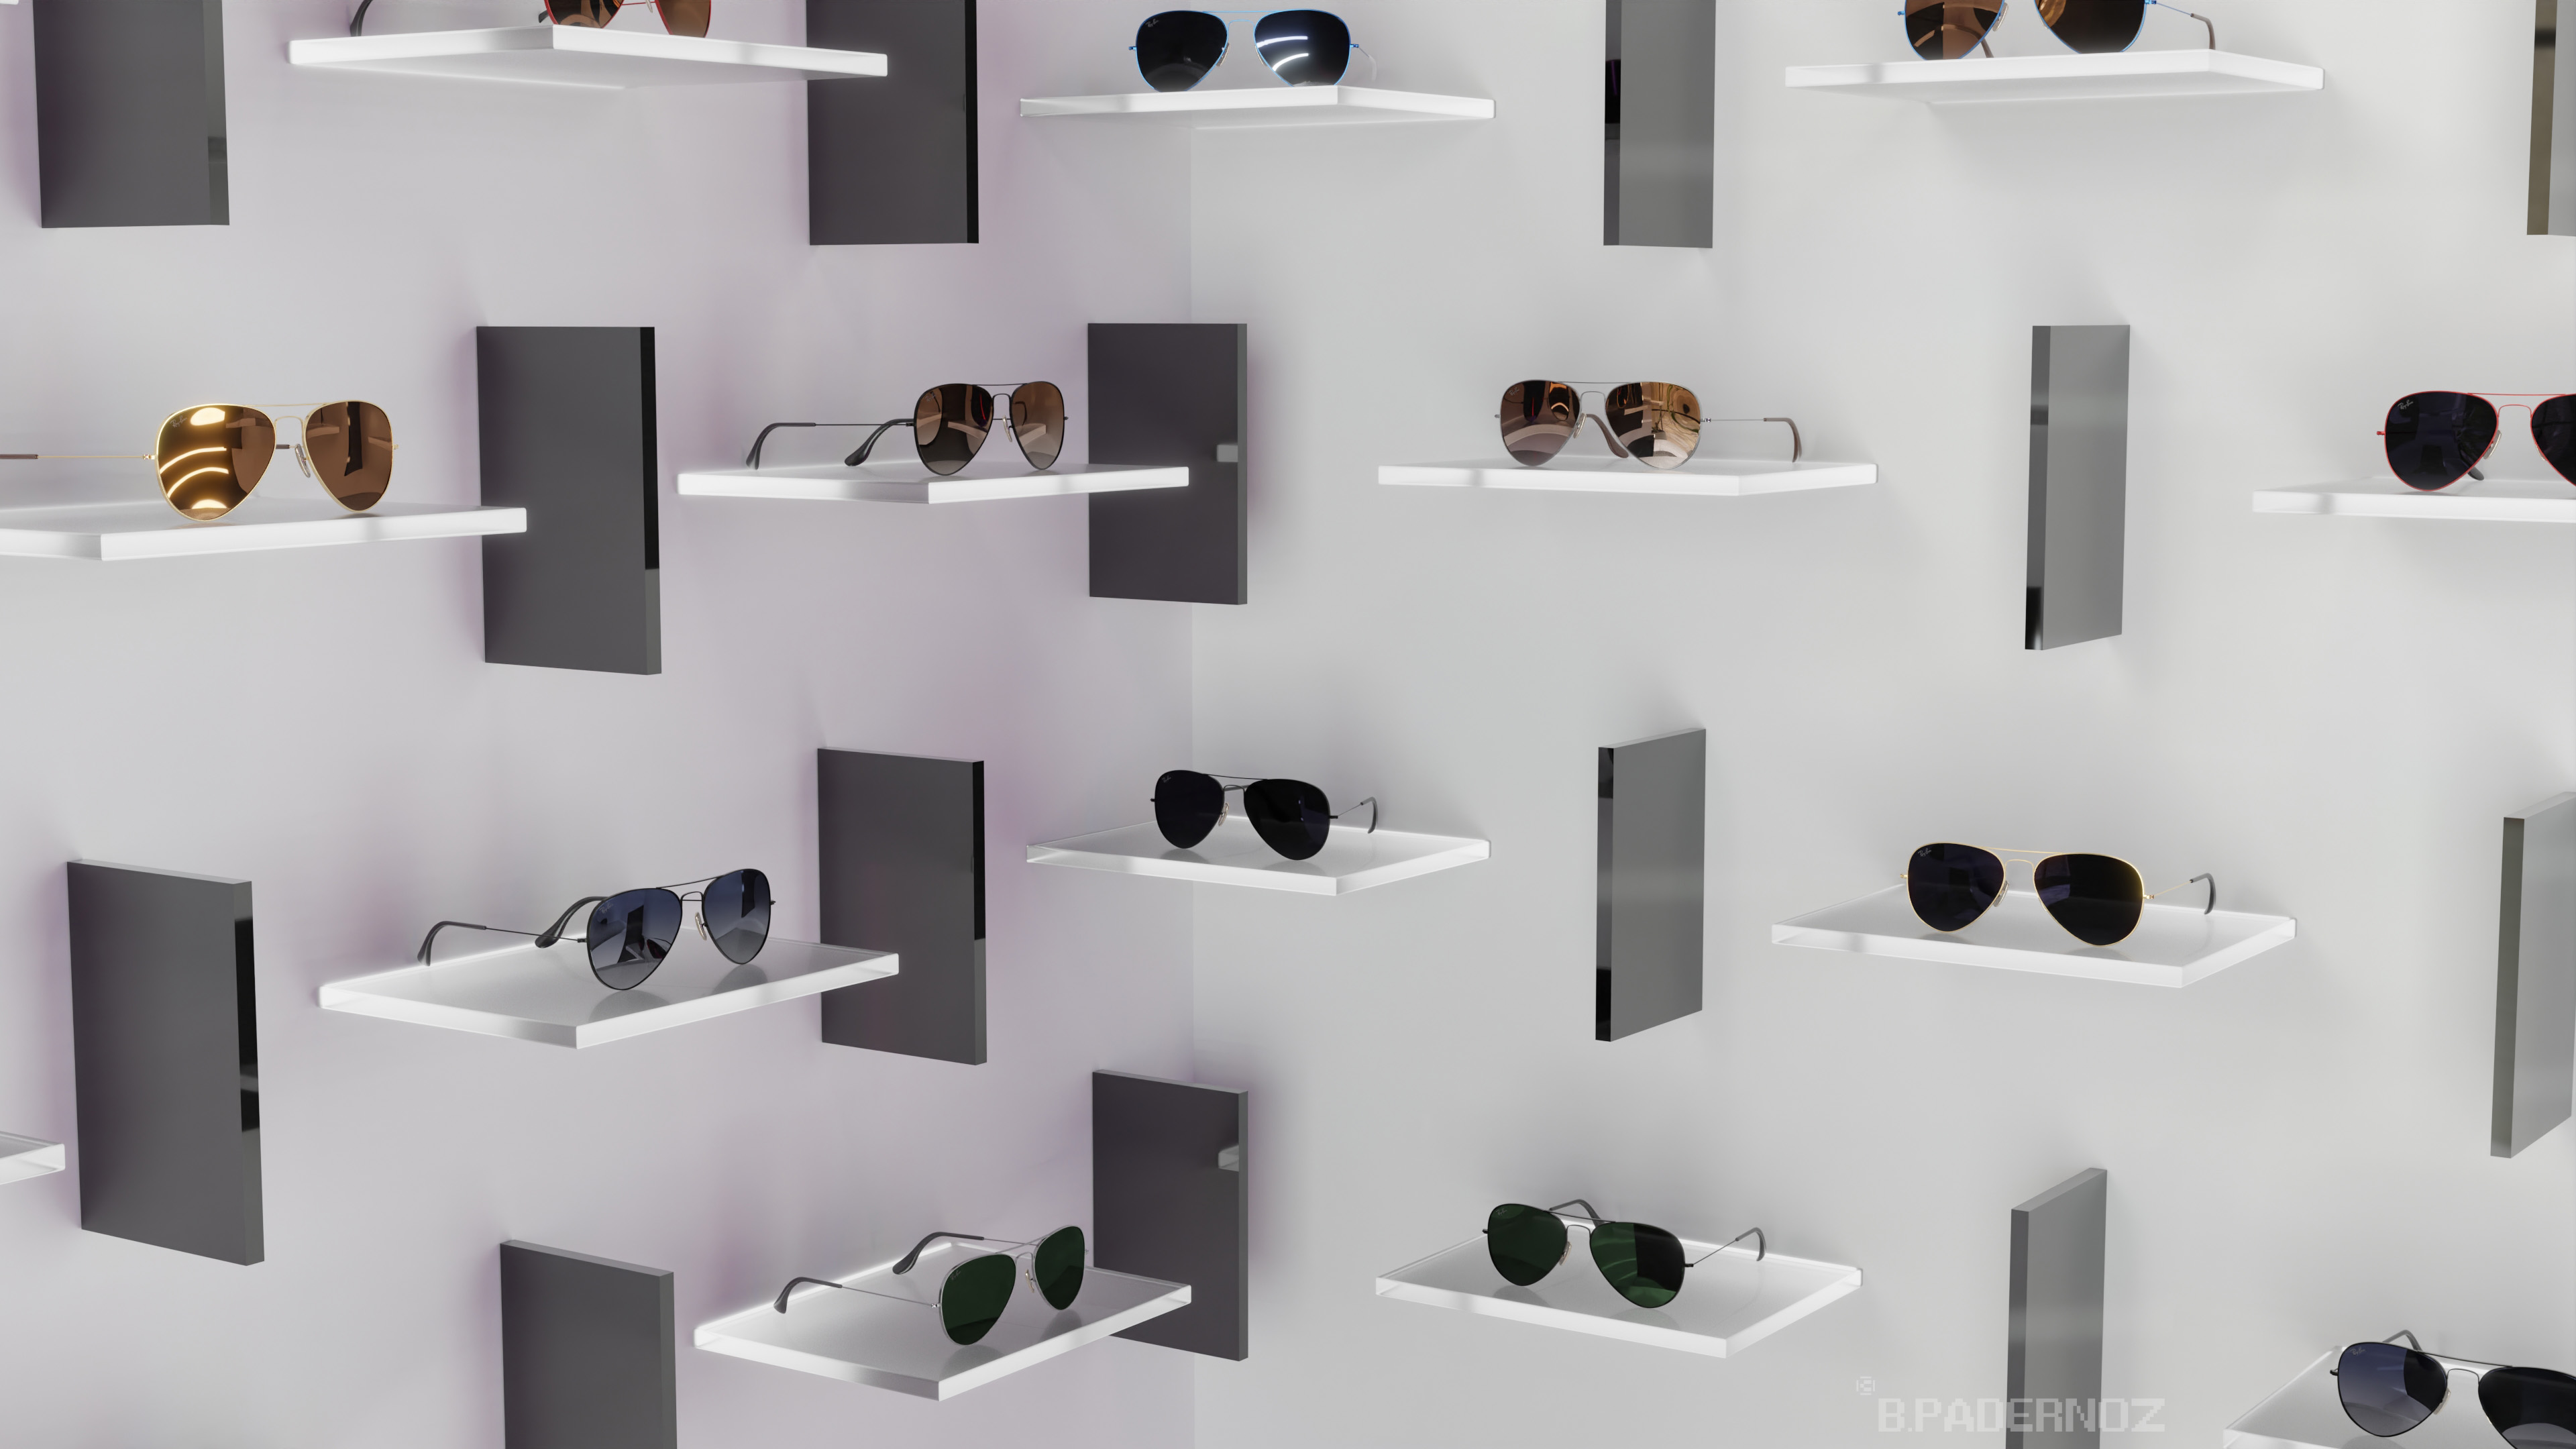 raybans sunglasses models + photorealistic rendering